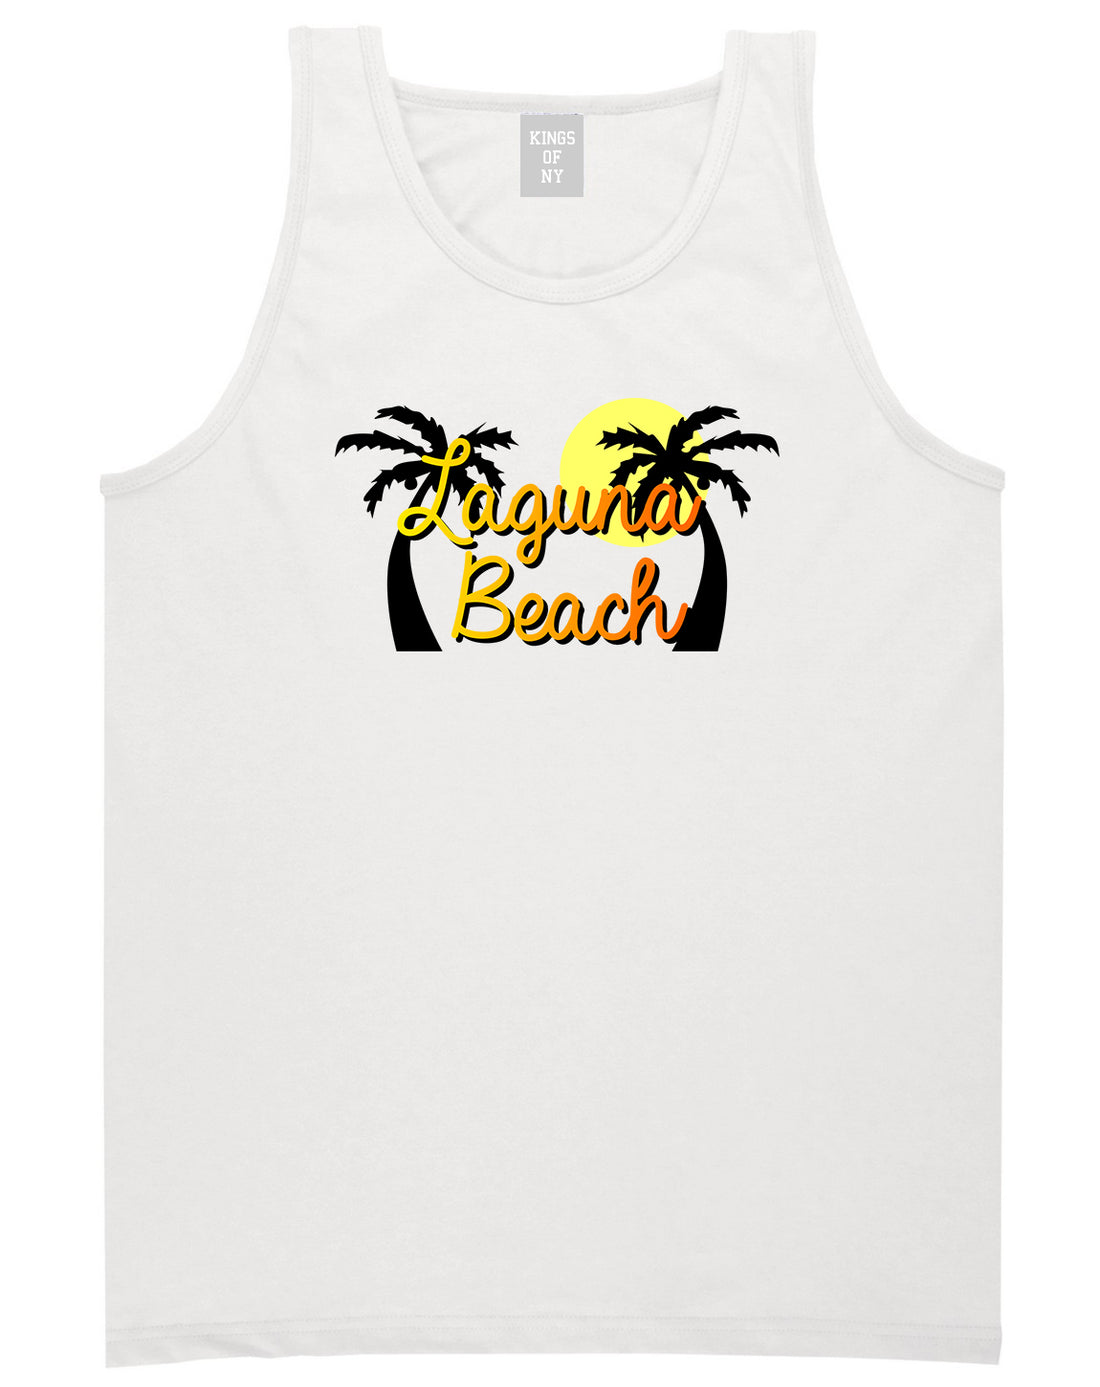 Laguna Beach California Mens Tank Top Shirt White by Kings Of NY